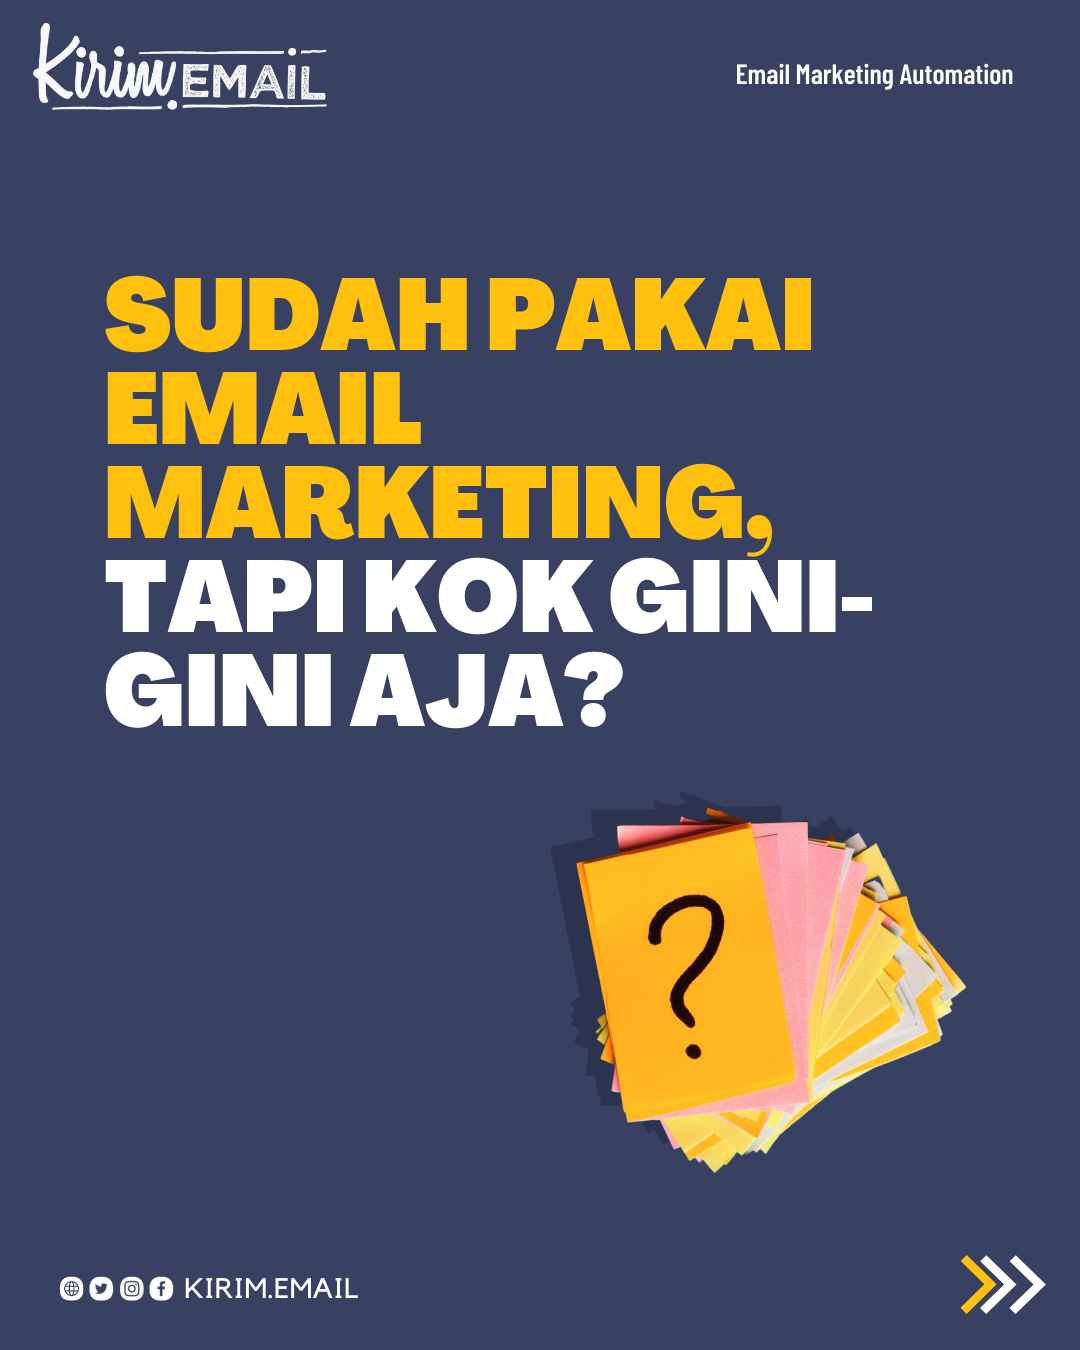 Sudah Pakai Email Marketing Tapi Kok Gini-Gini Aja?